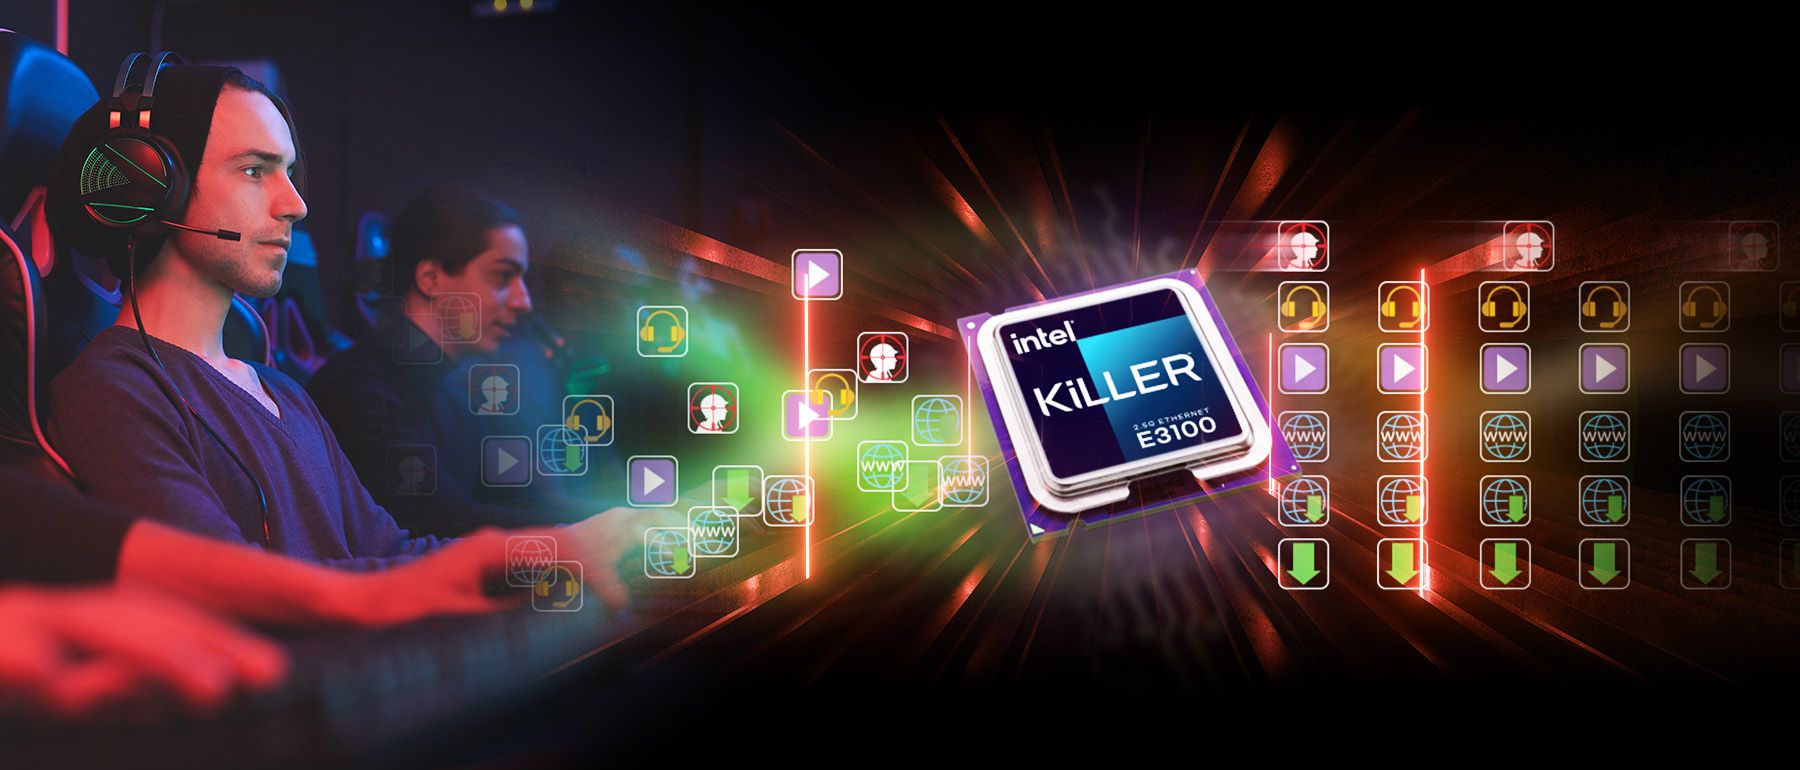 Killer™ イーサネット E3100